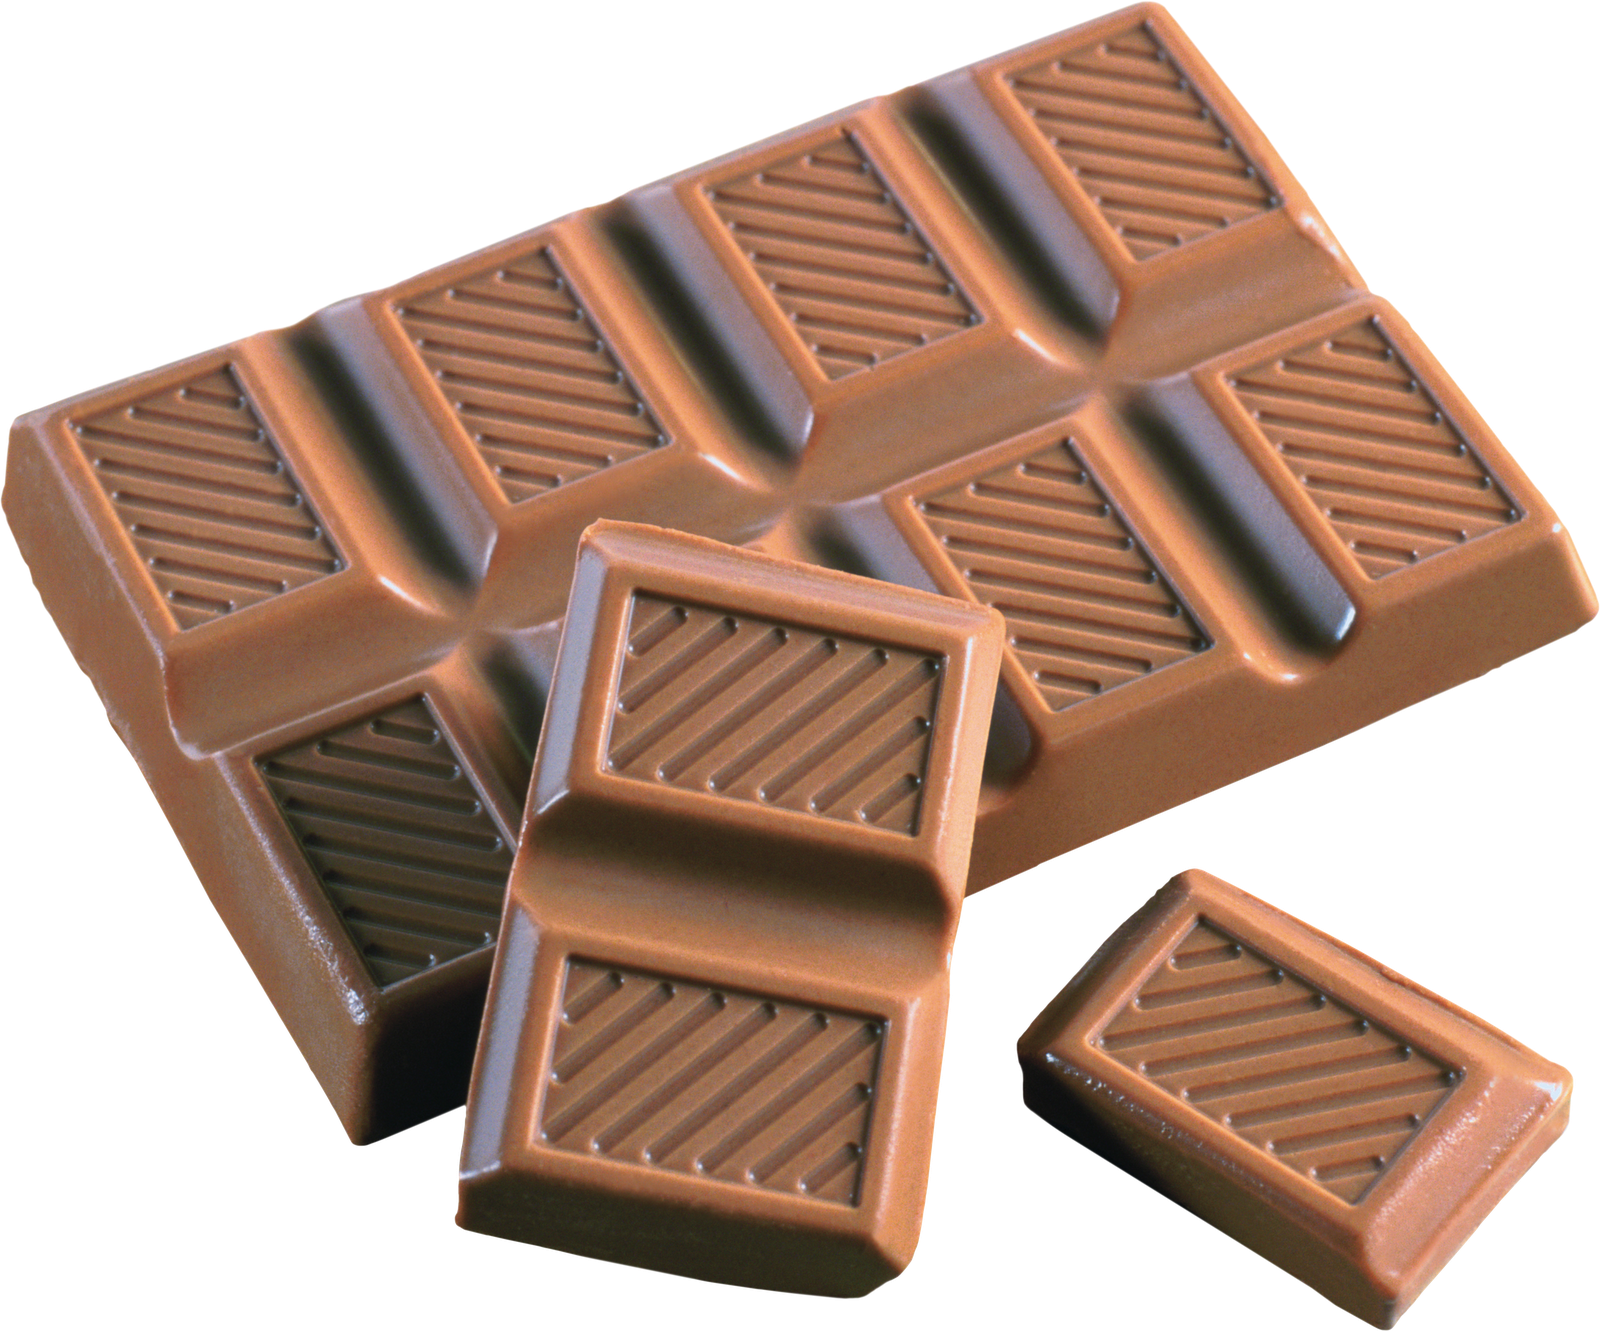 Chocolate Bar Png Image - Ambrozijntje, Transparent background PNG HD thumbnail